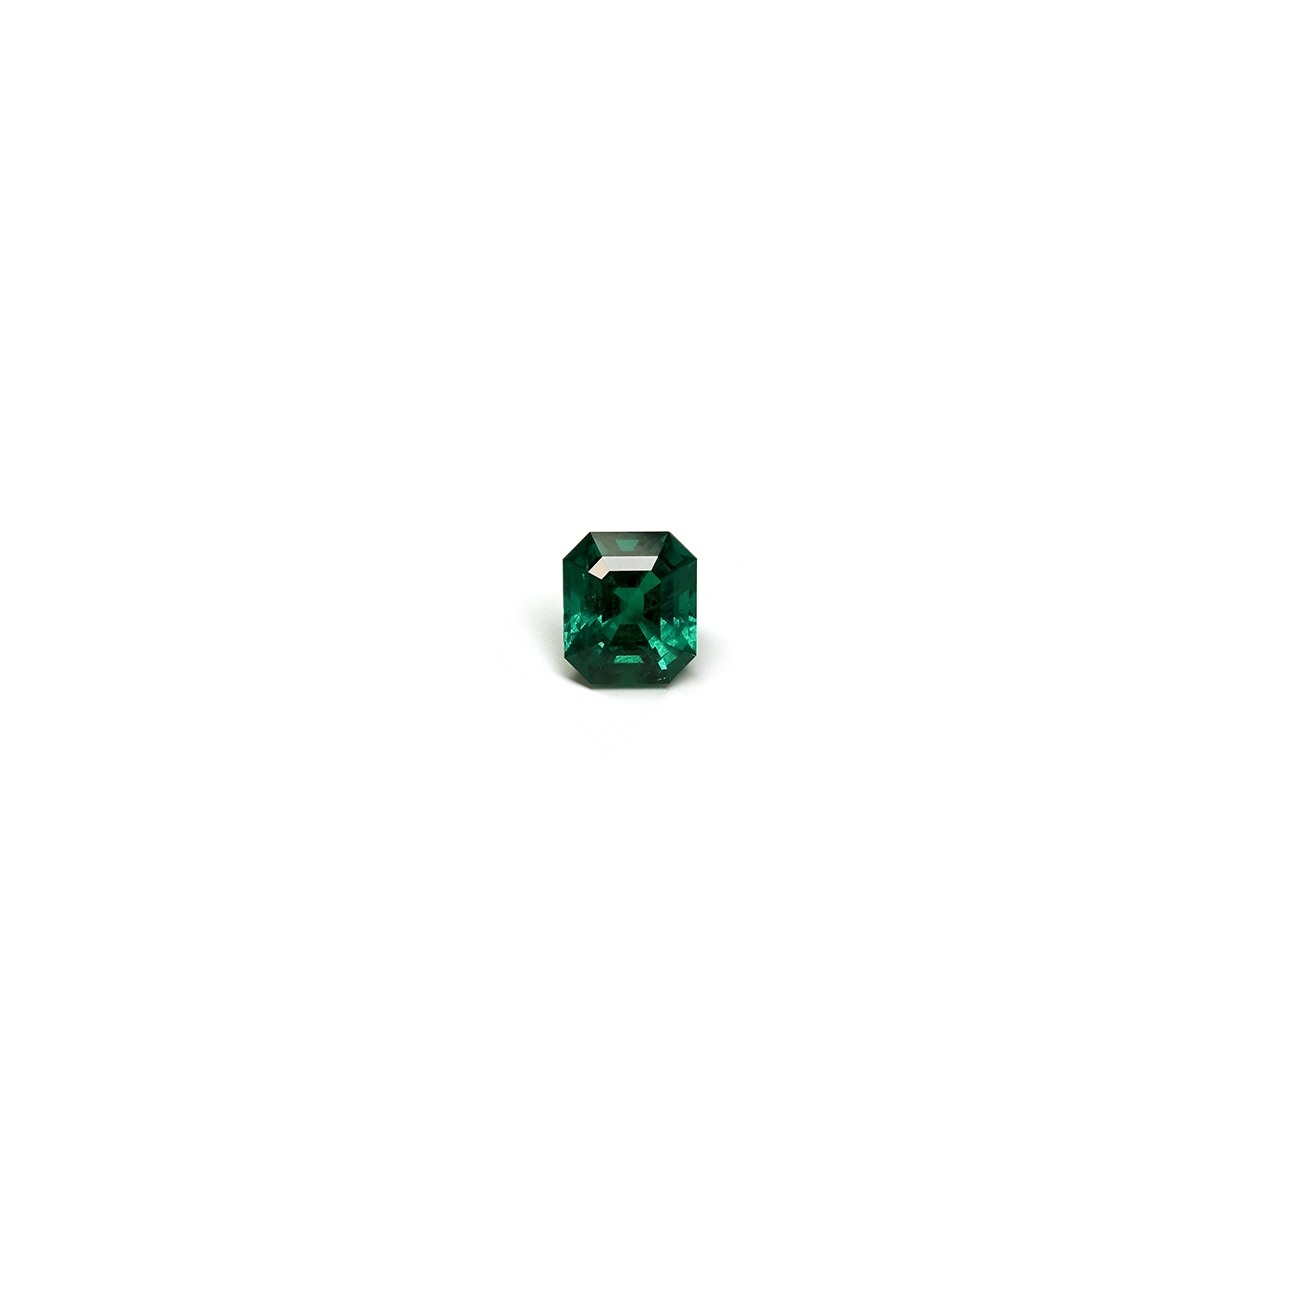 8 carat emerald cut